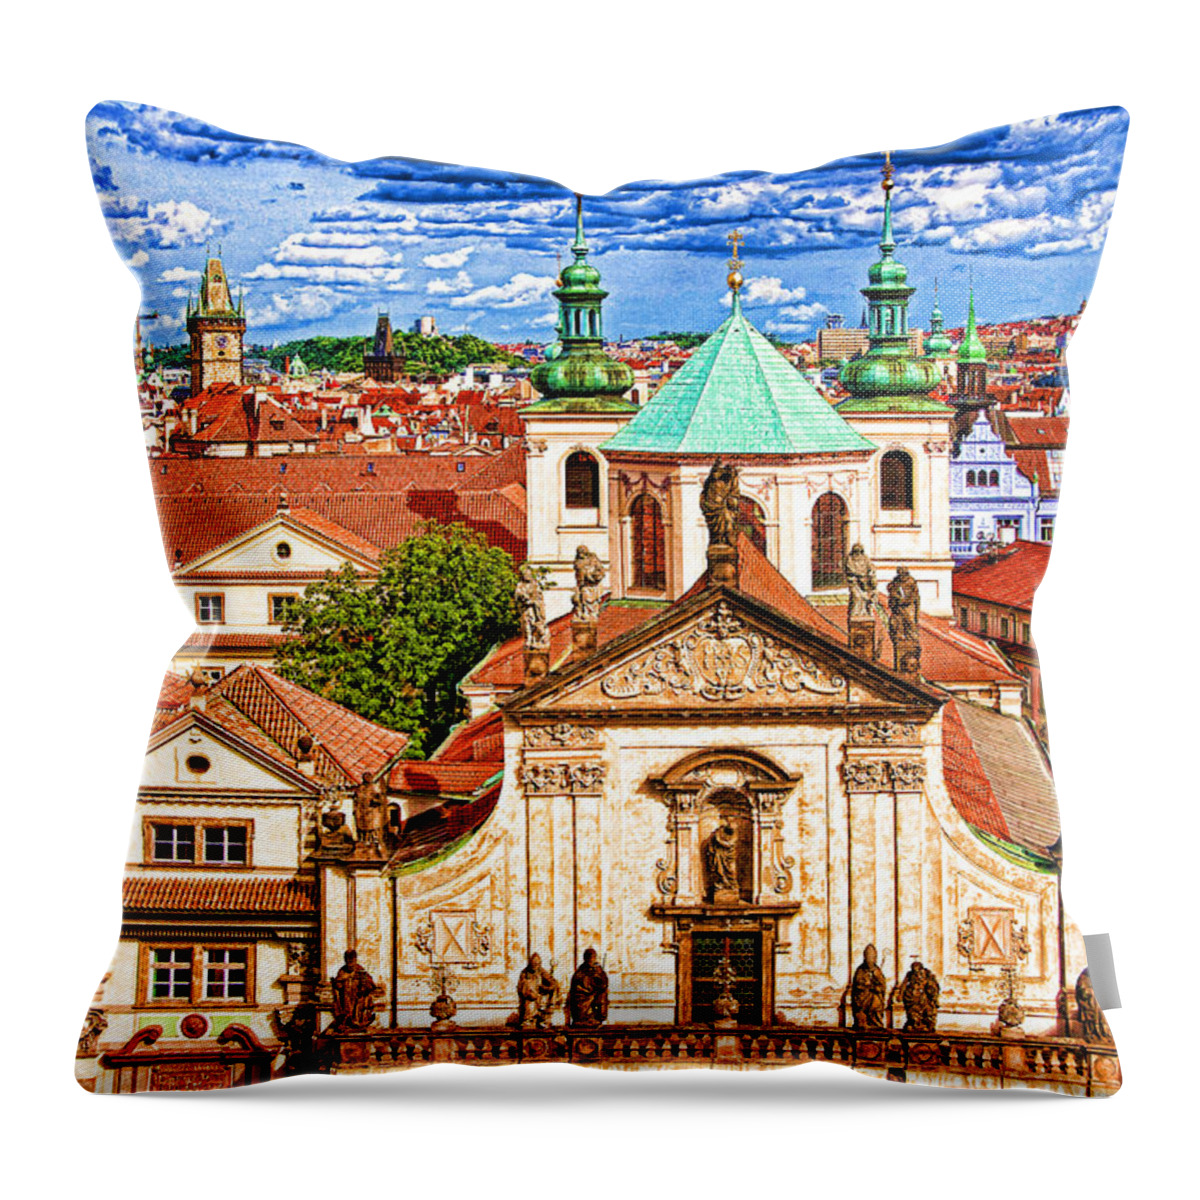 Czech Republic Throw Pillow featuring the photograph Old Town Prague #2 by Dennis Cox